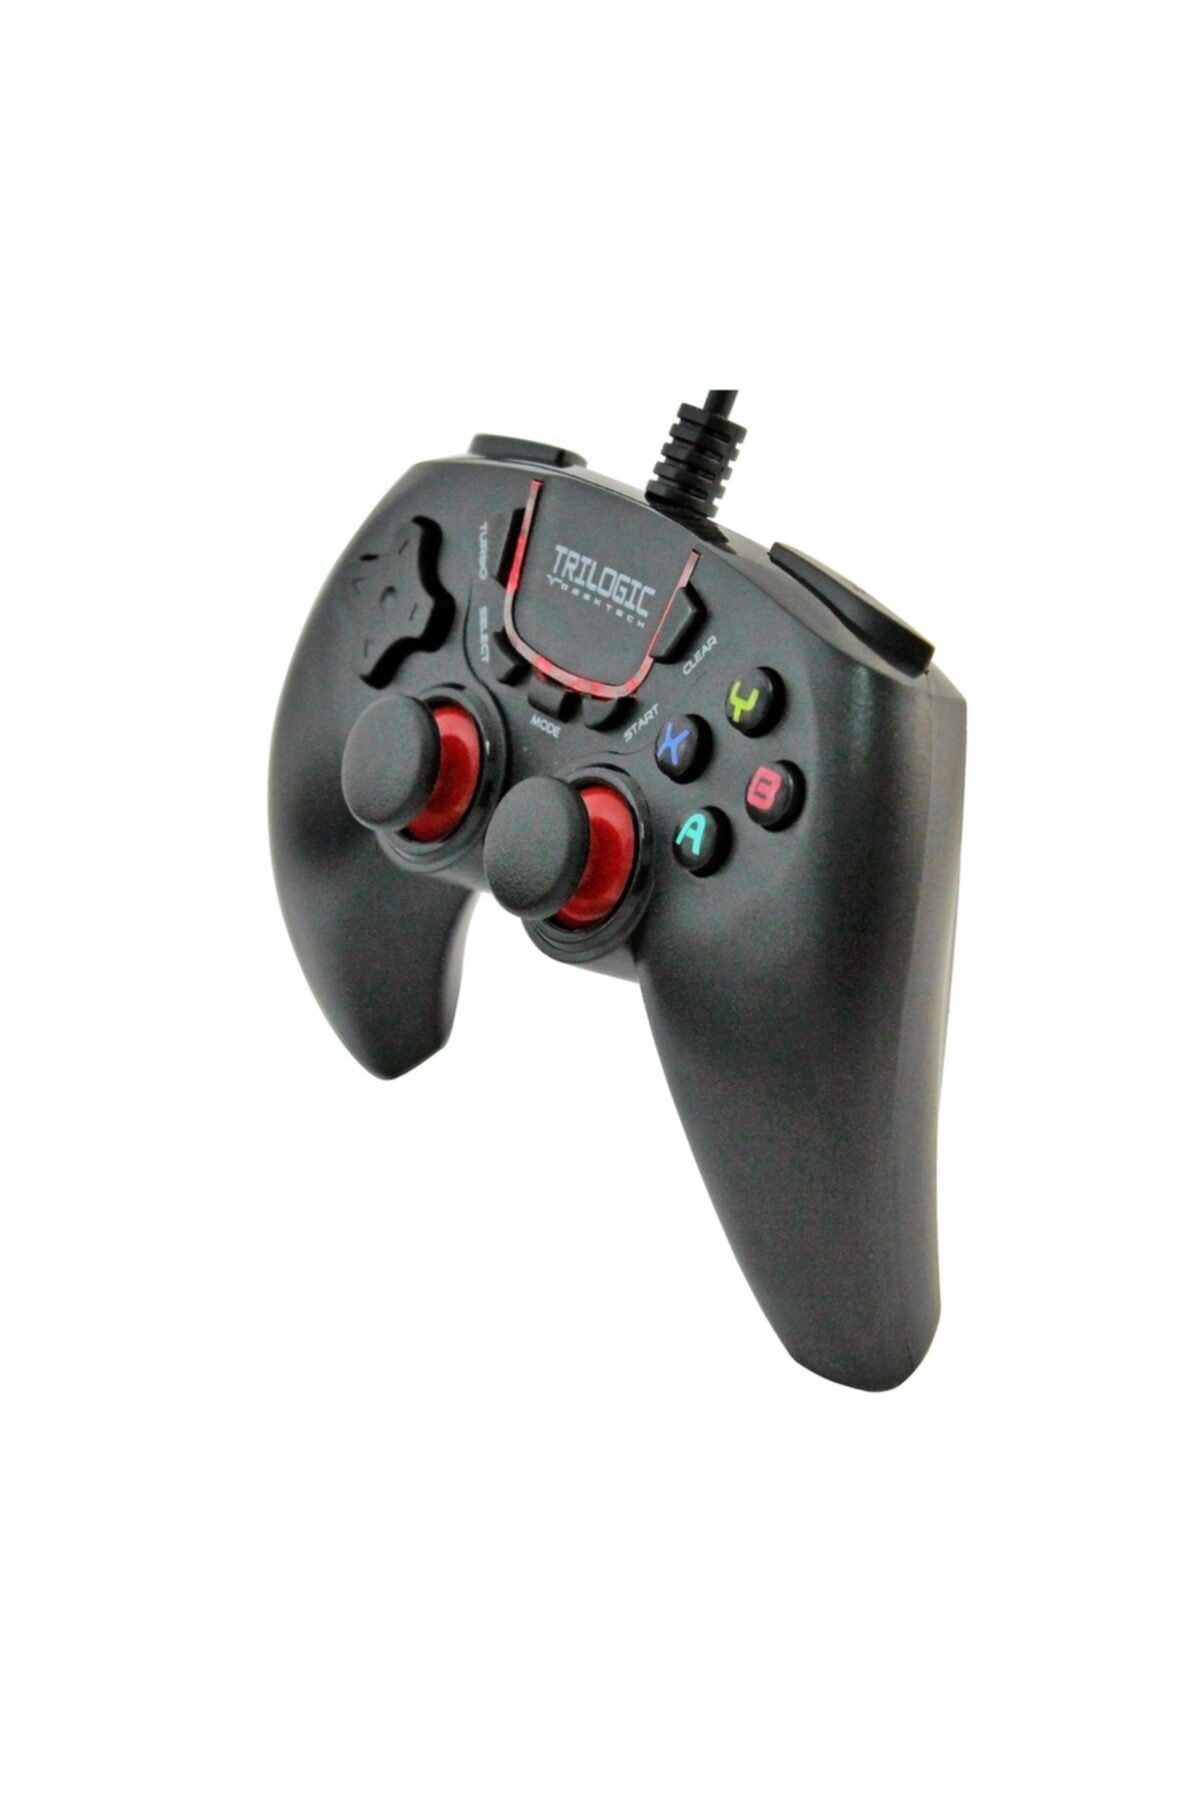 TRILOGIC Cobra Gp818 turbo usb Gamepad Oyun Kolu Joystick Kırmızı